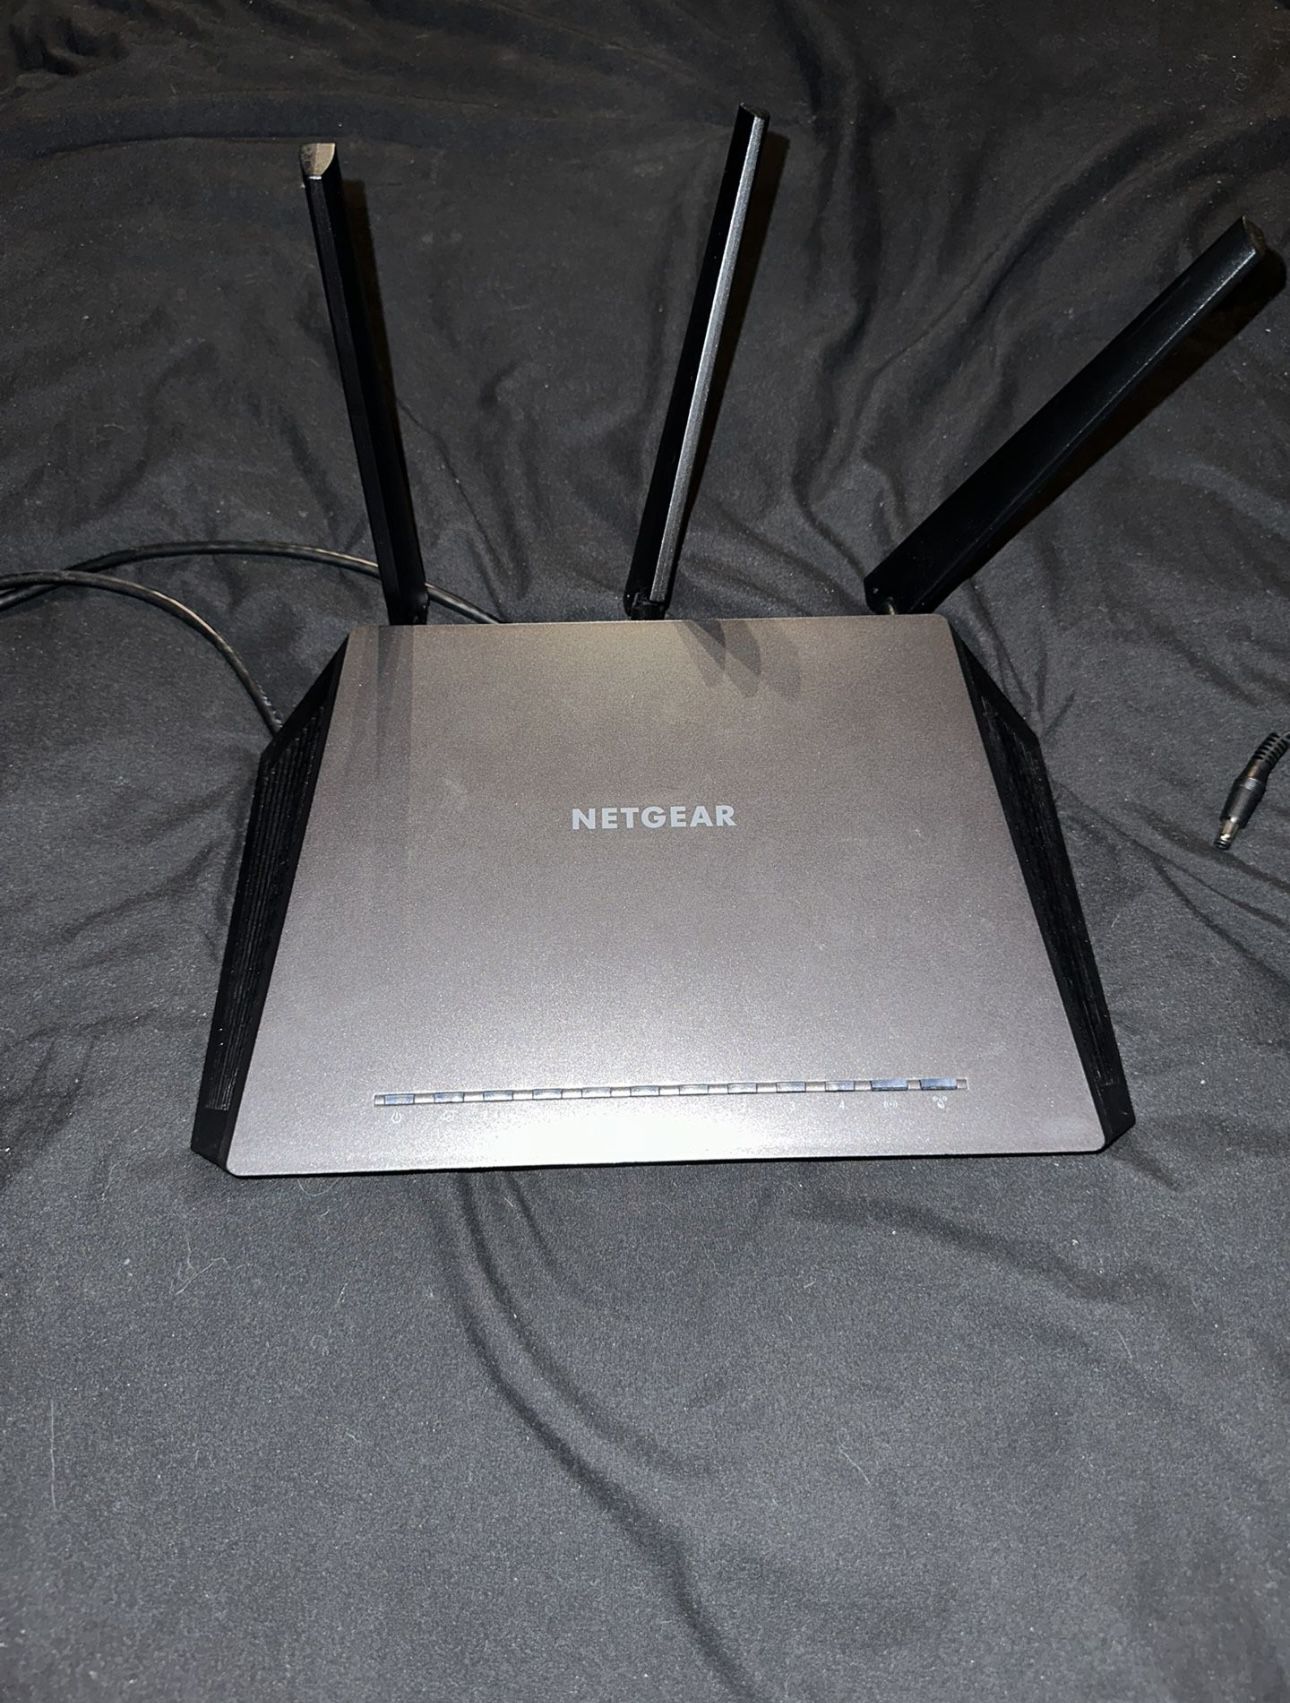 Netgear Nighthawk R7000 Router